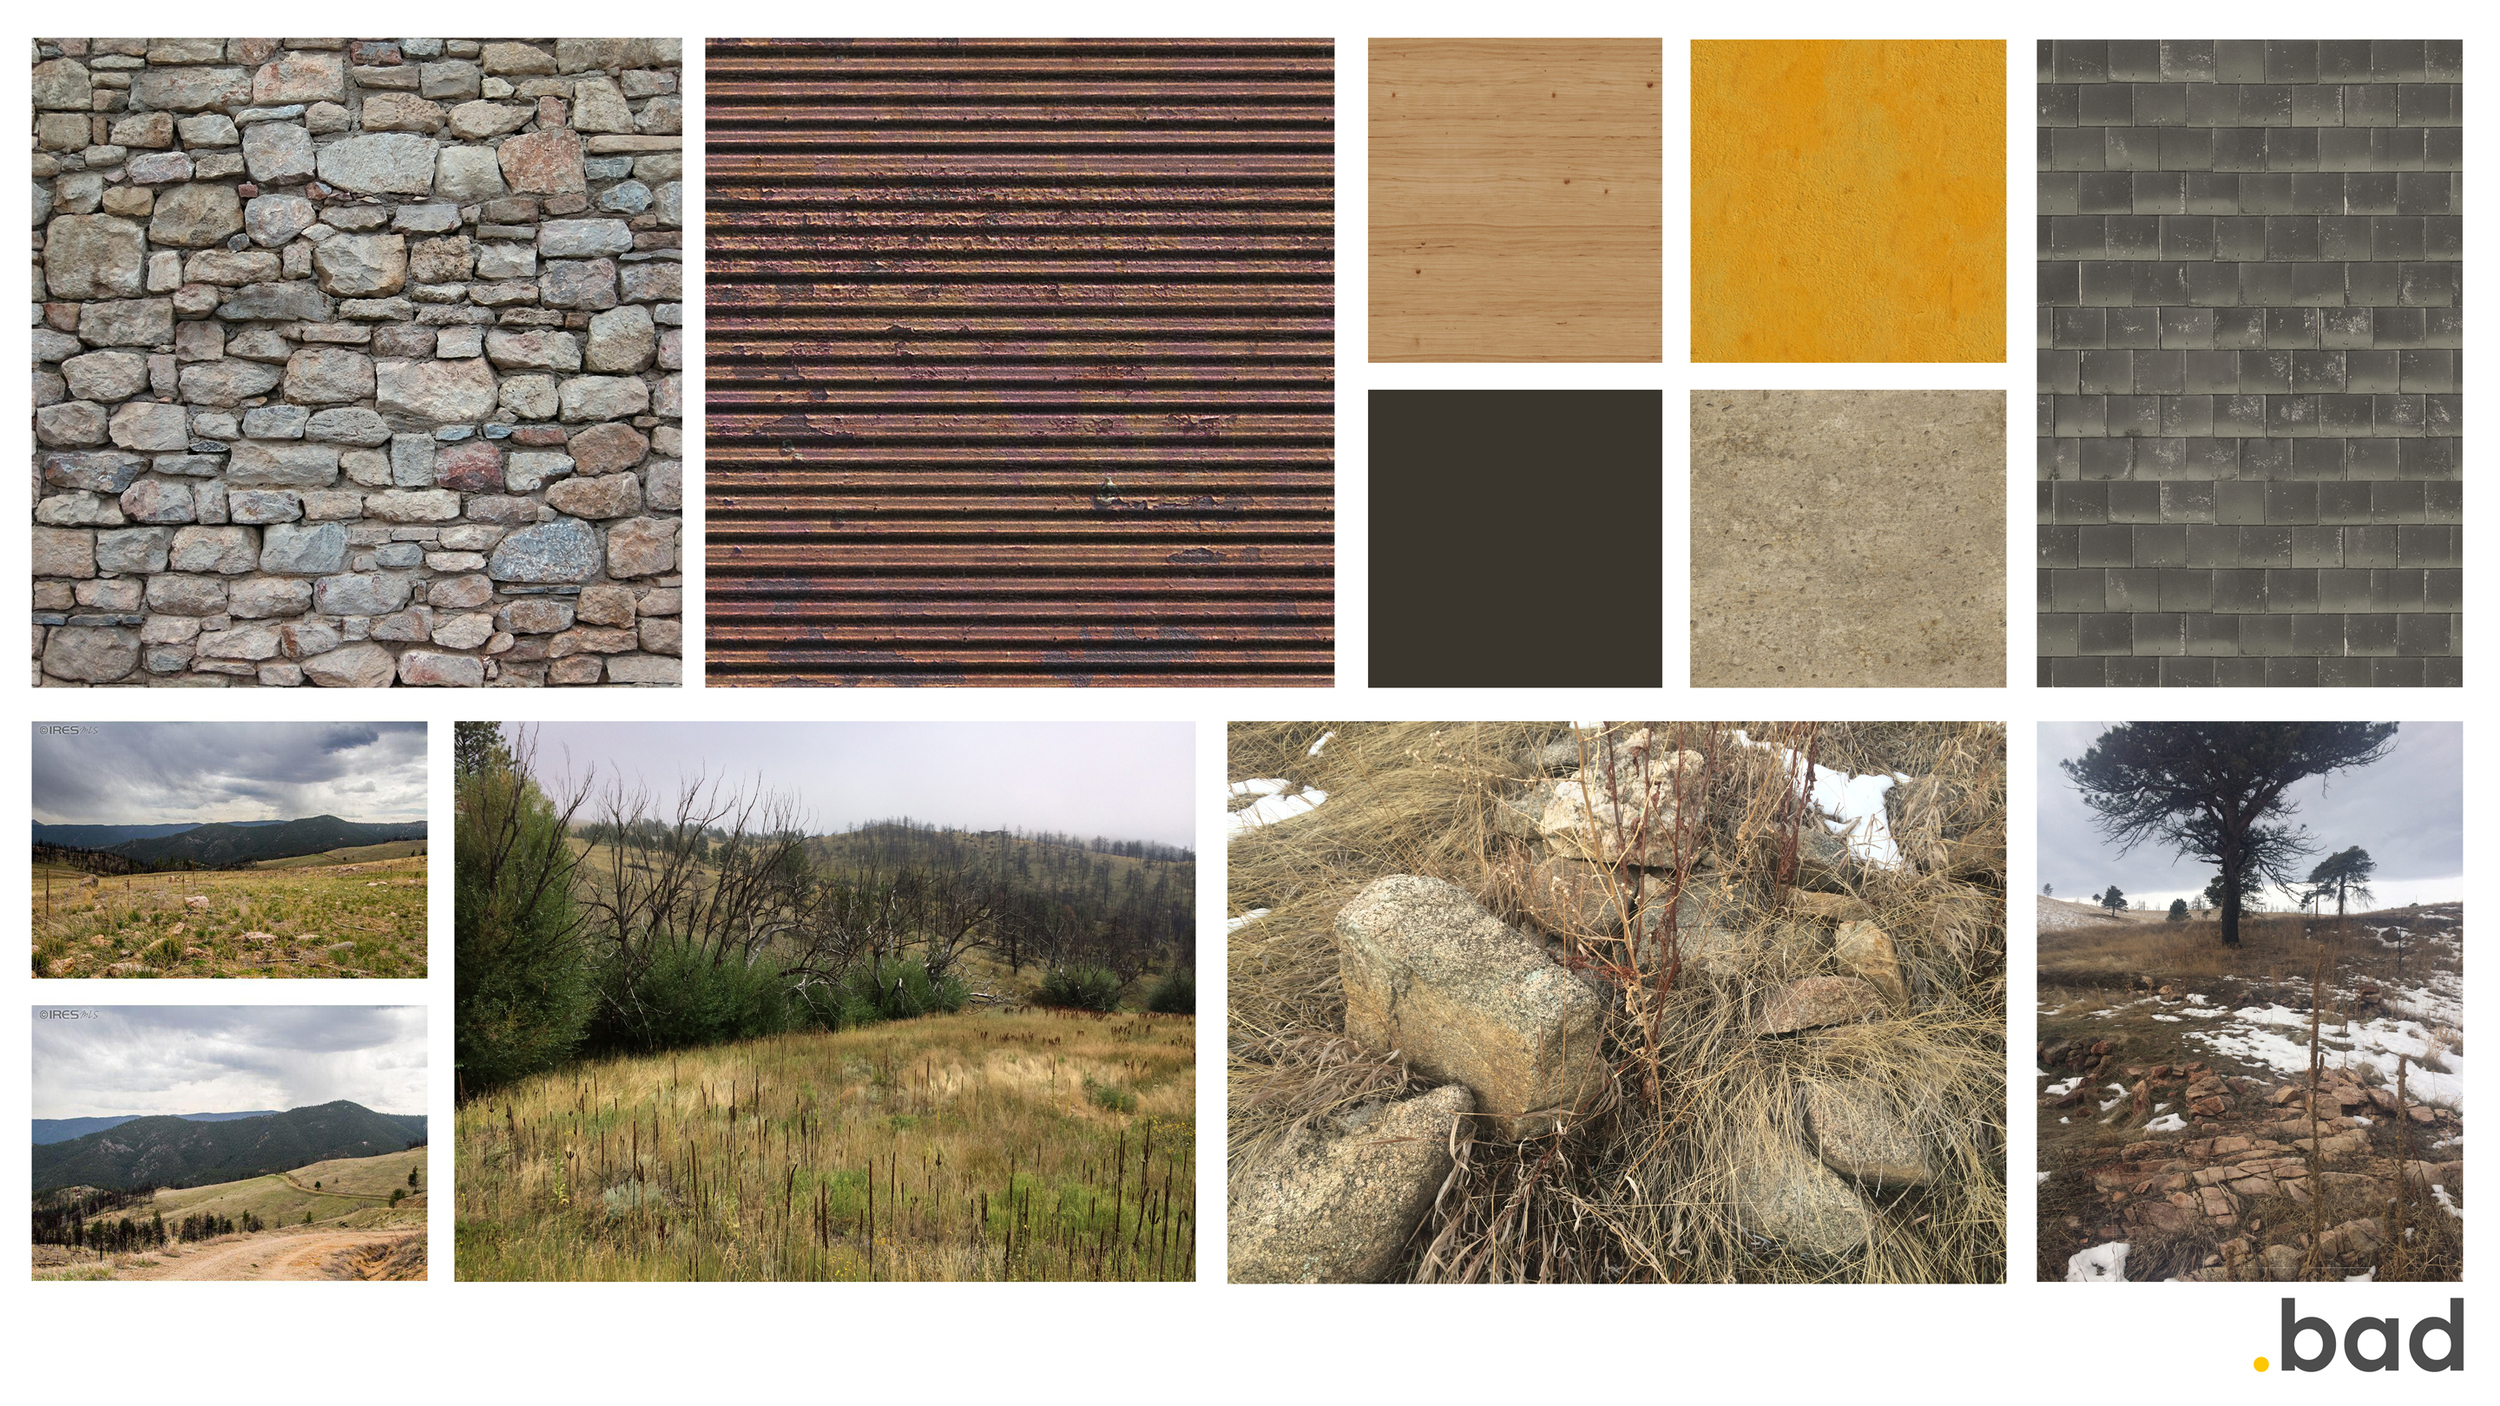 09 - Rocky Mountain - Materials - Exterior copy.jpg